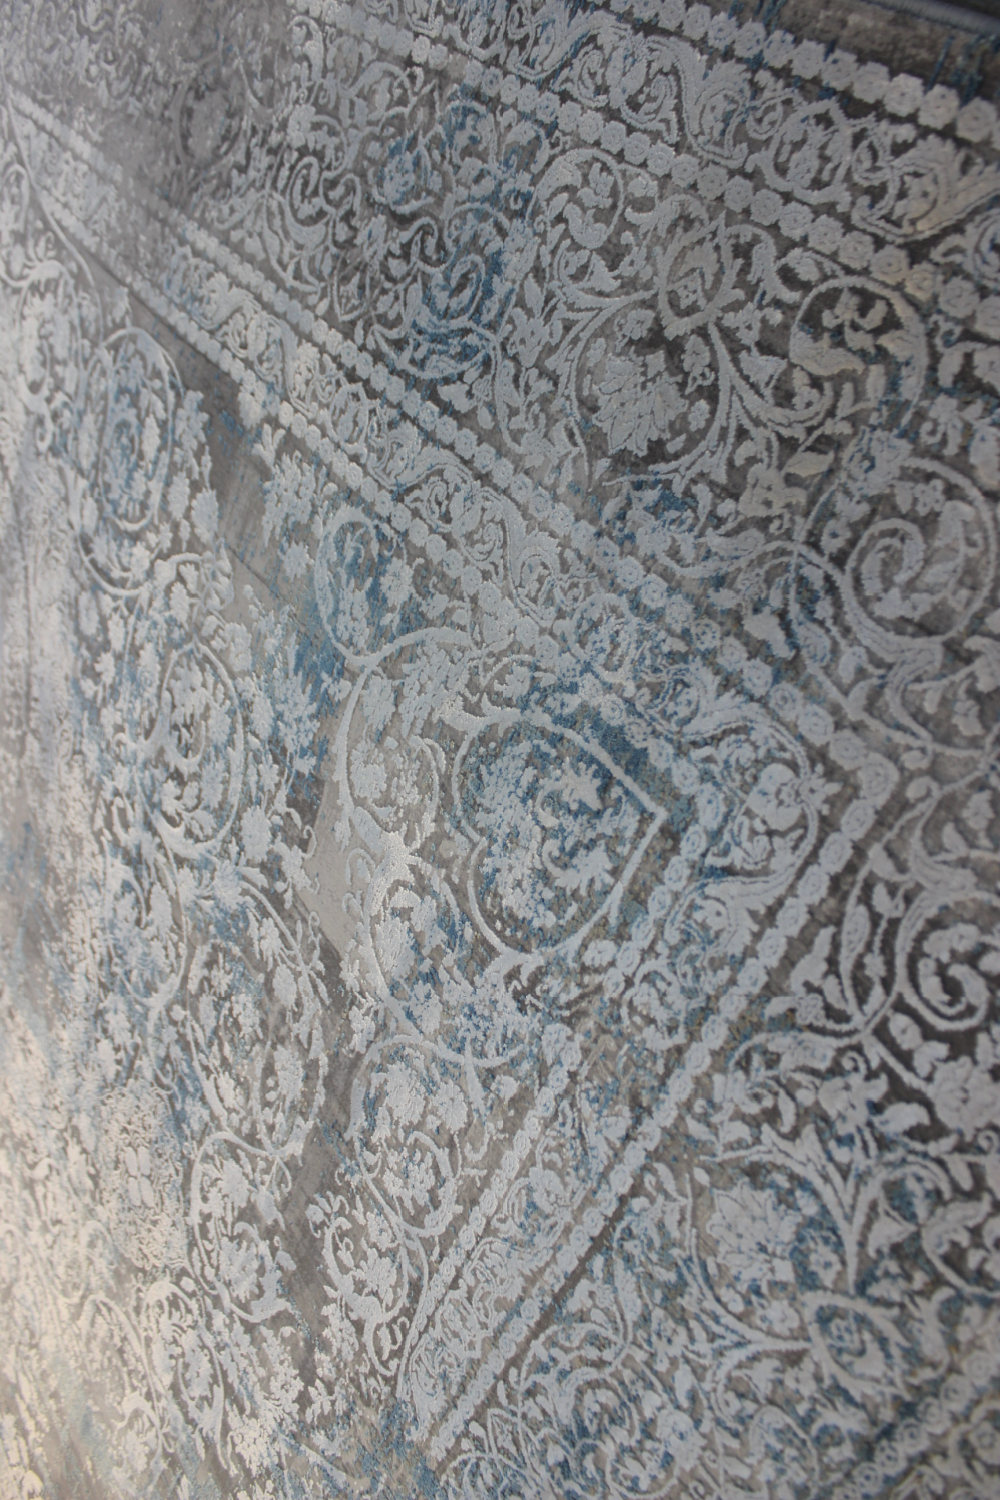 Floral Design Persian Carpet | Andrew Martin Mendeley | Oroa.com